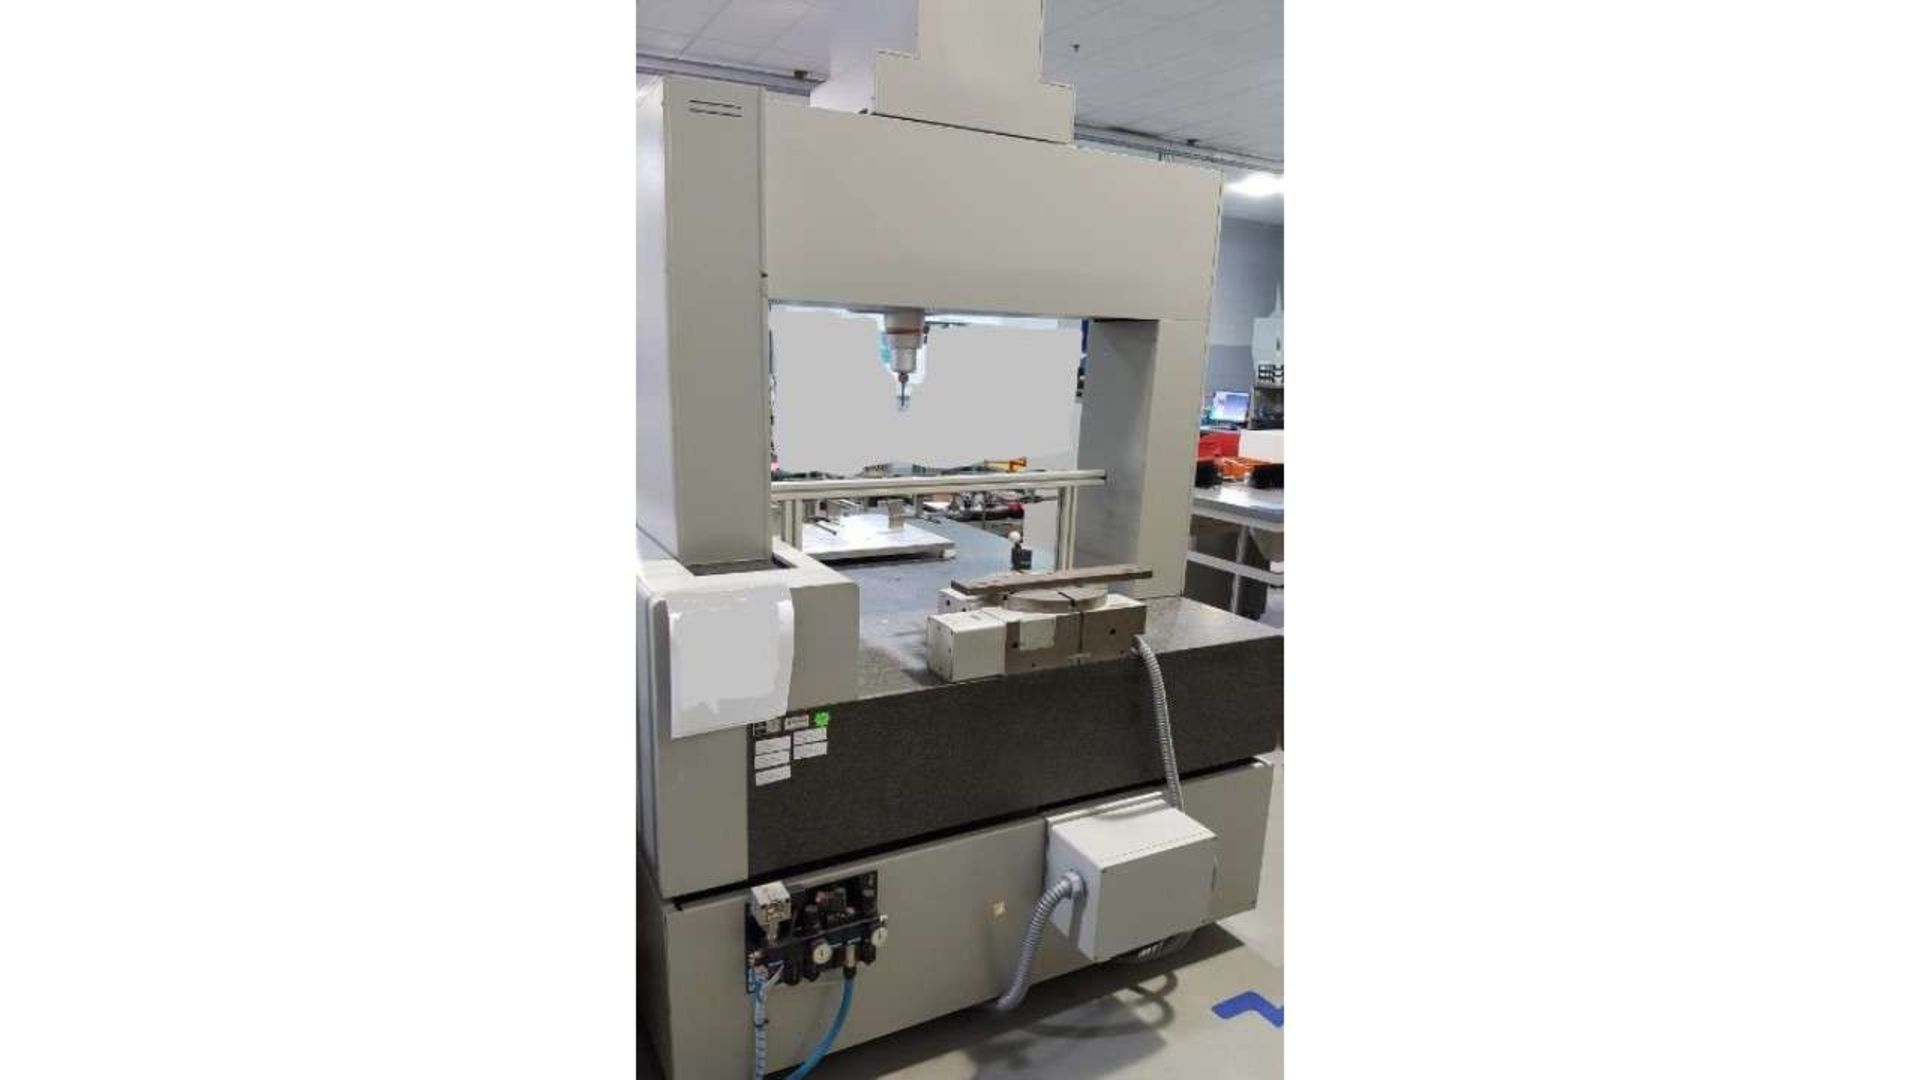 Zeiss UMC 850 Coordinate Measuring Machine - Image 3 of 4